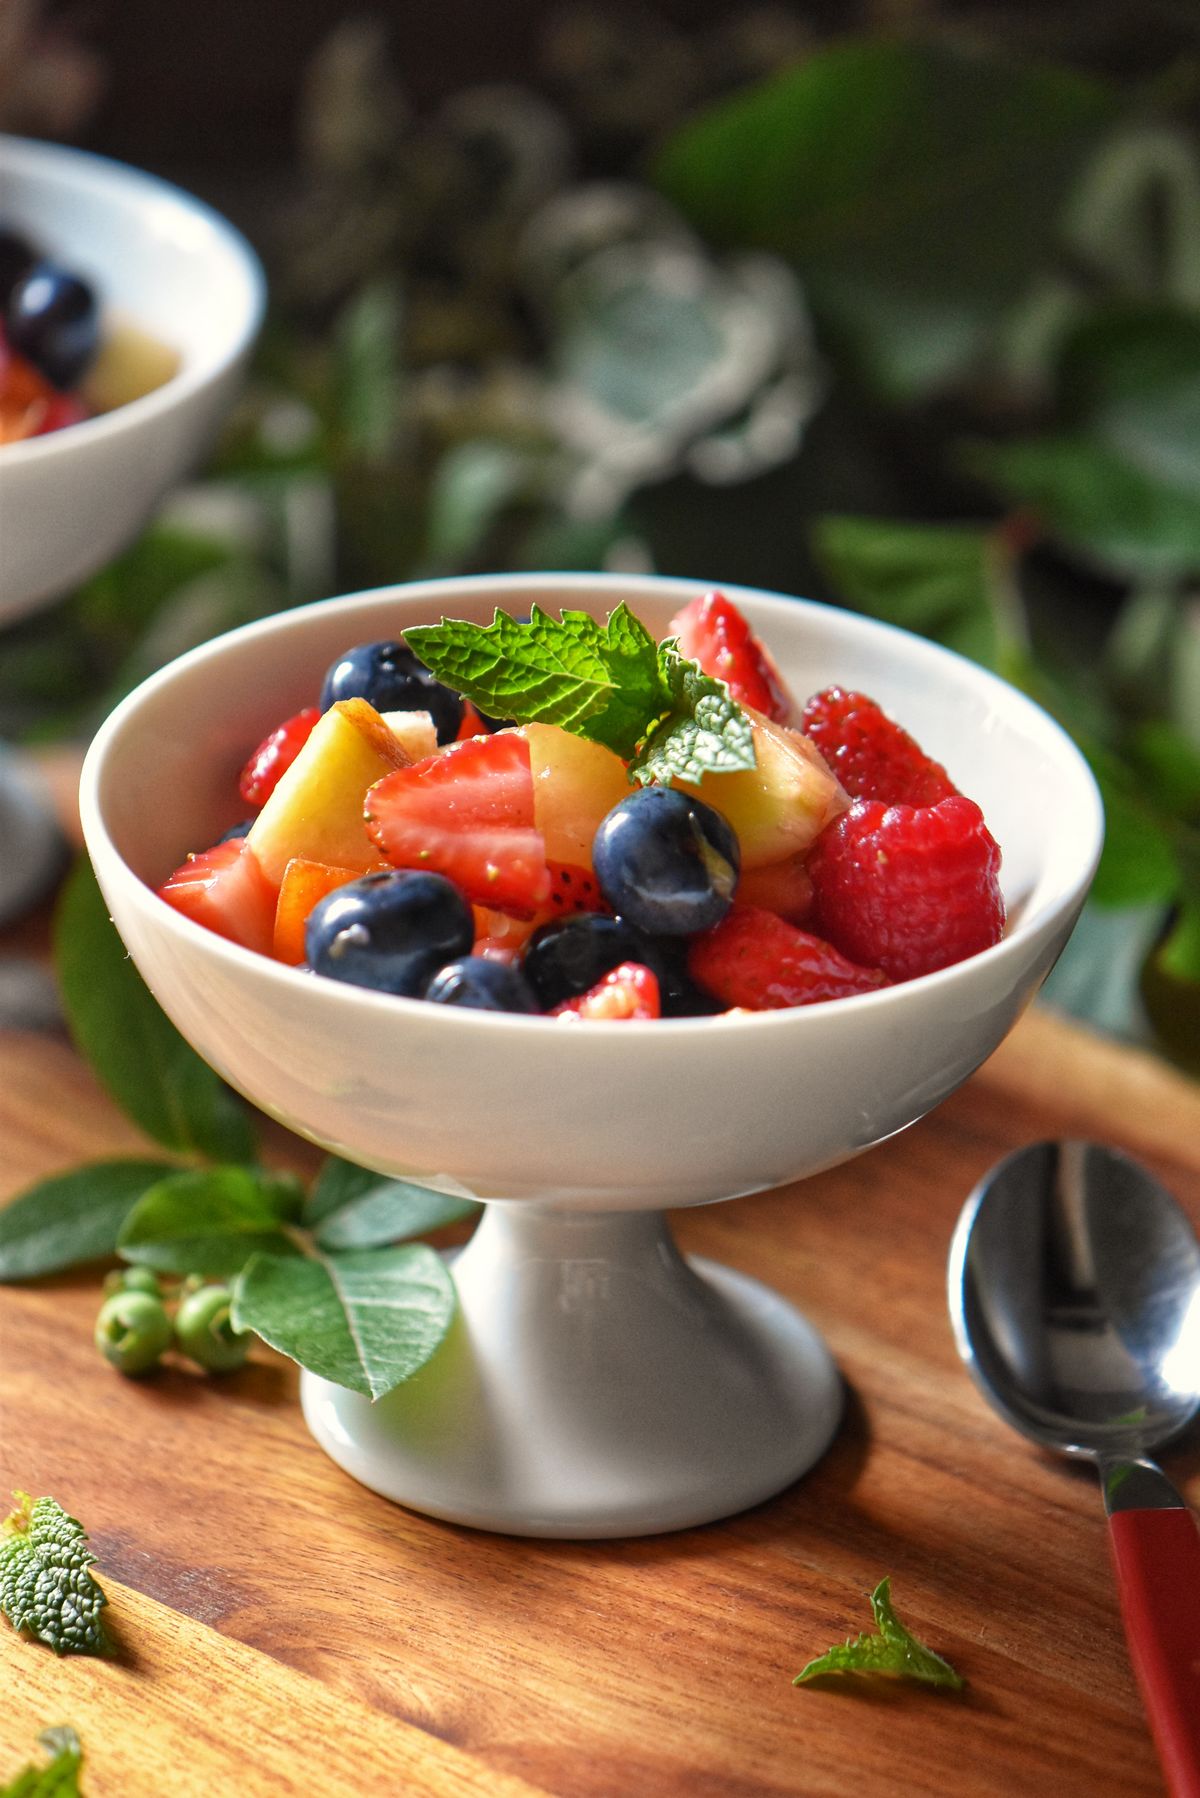 https://www.shelovesbiscotti.com/wp-content/uploads/2020/06/Healthy-Fruit-Salad-Recipe.jpg